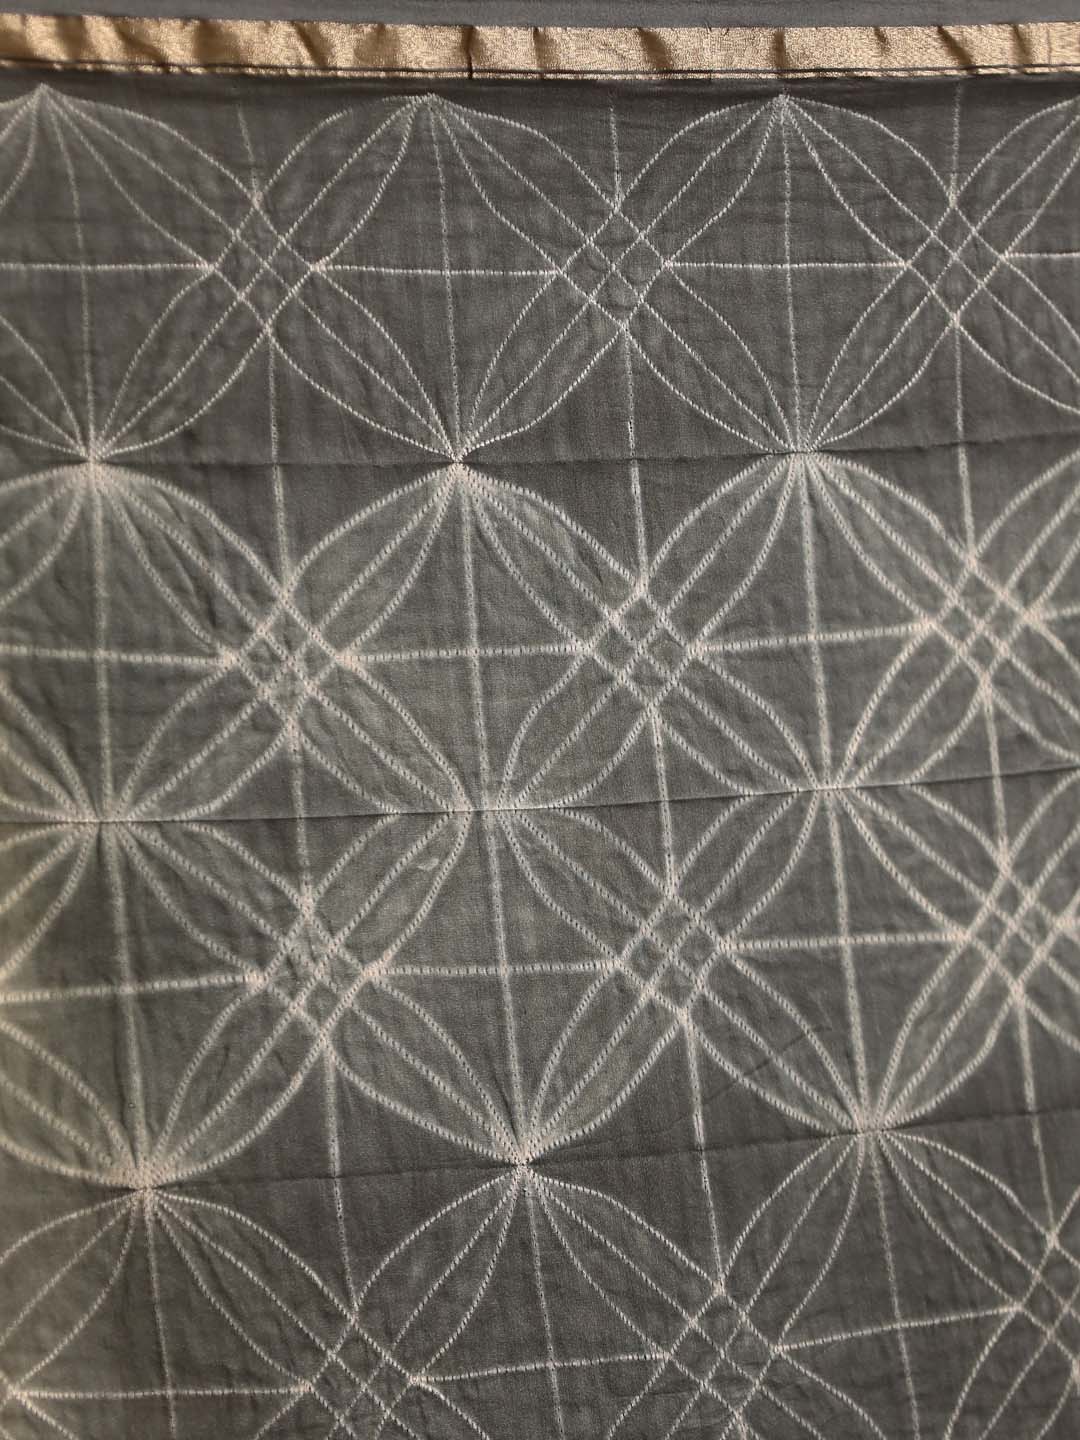 Indethnic Shibori Silk Cotton Saree in Black - Saree Detail View